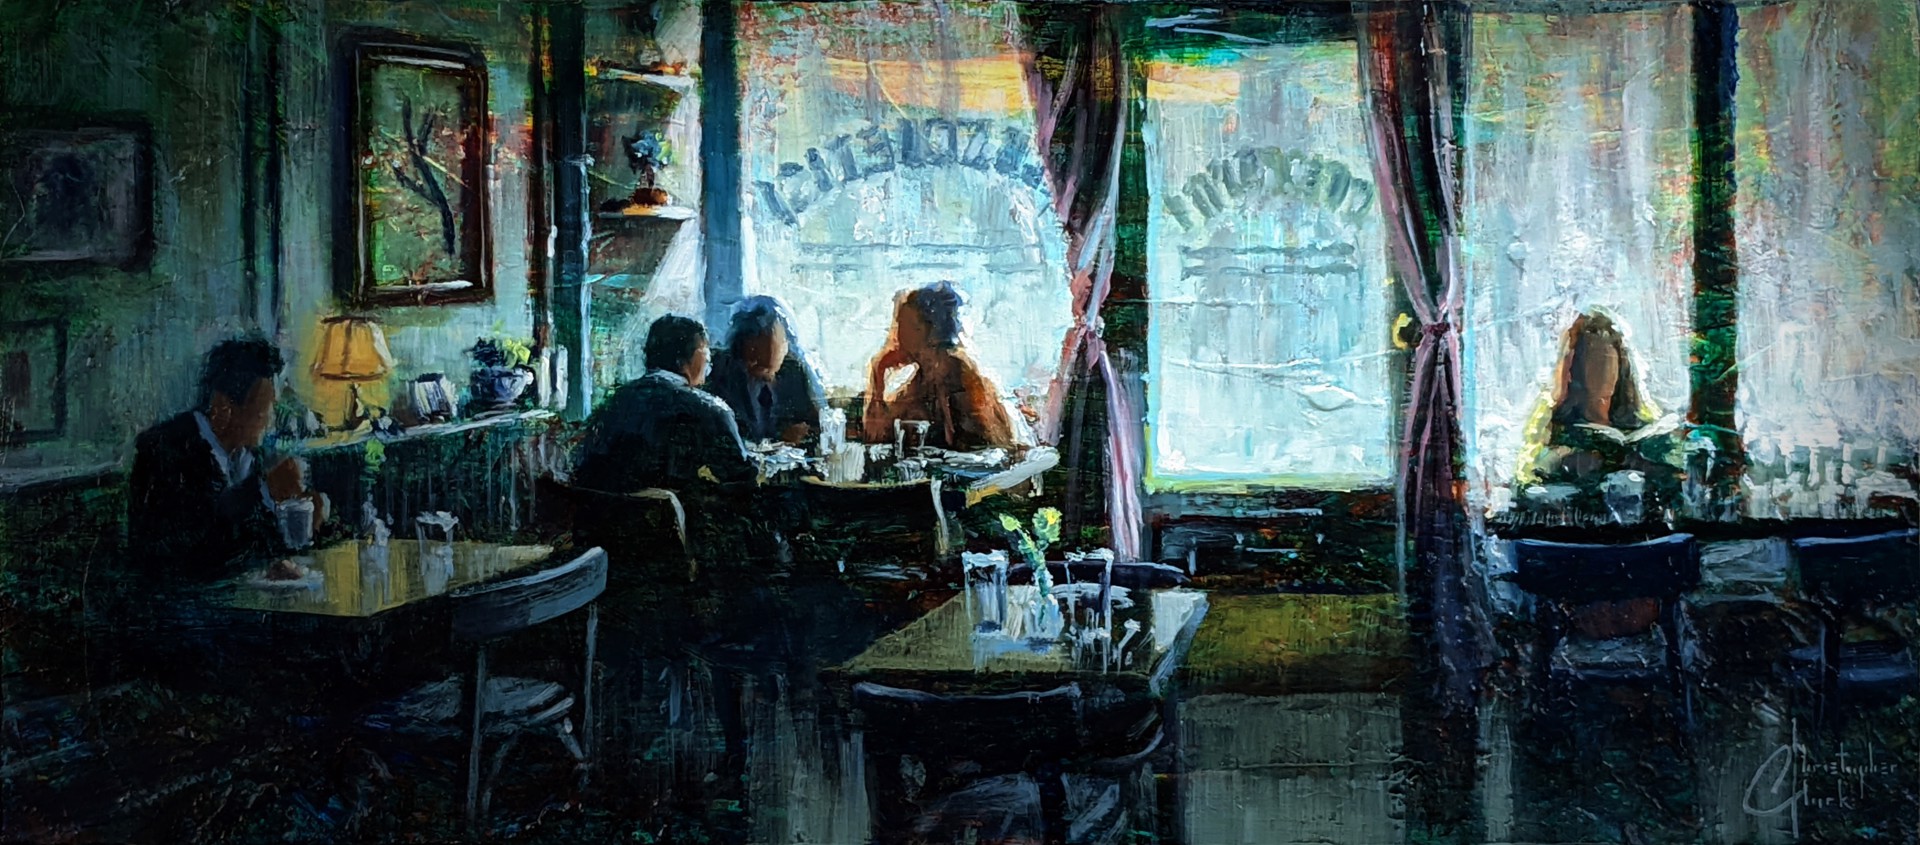 New York City, Cafe 1 by Christopher Clark